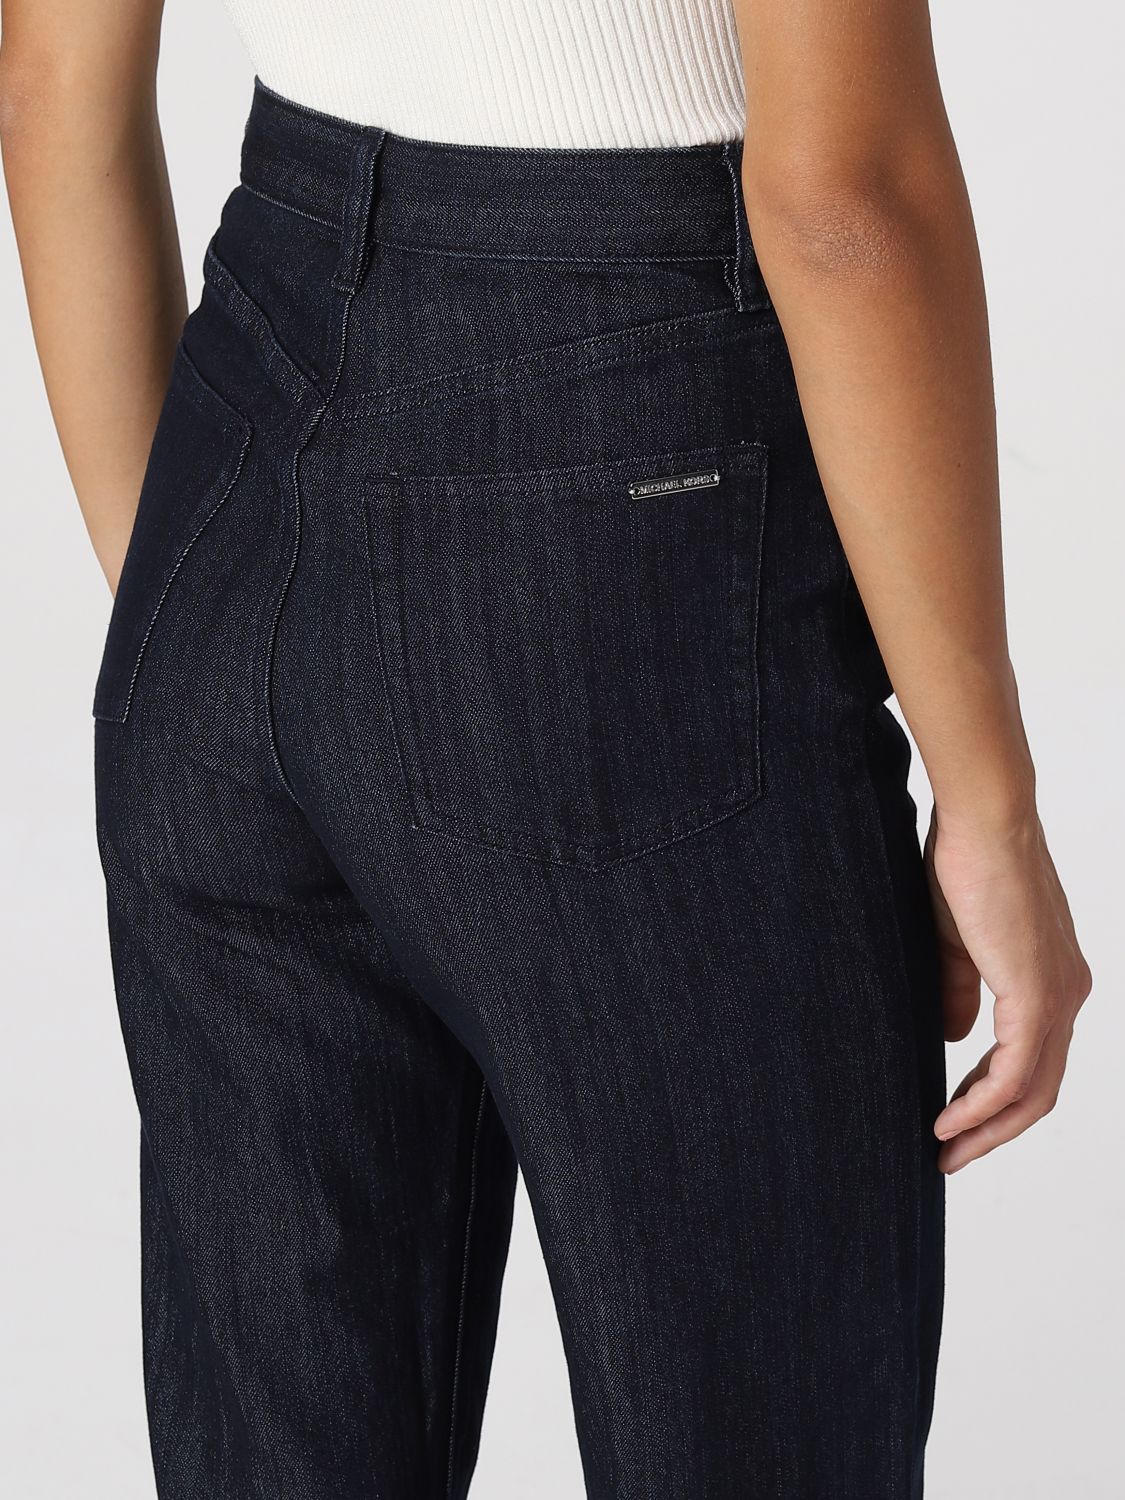 MICHAEL KORS: jeans for woman - Denim | Michael Kors jeans MU2902GM24  online on 